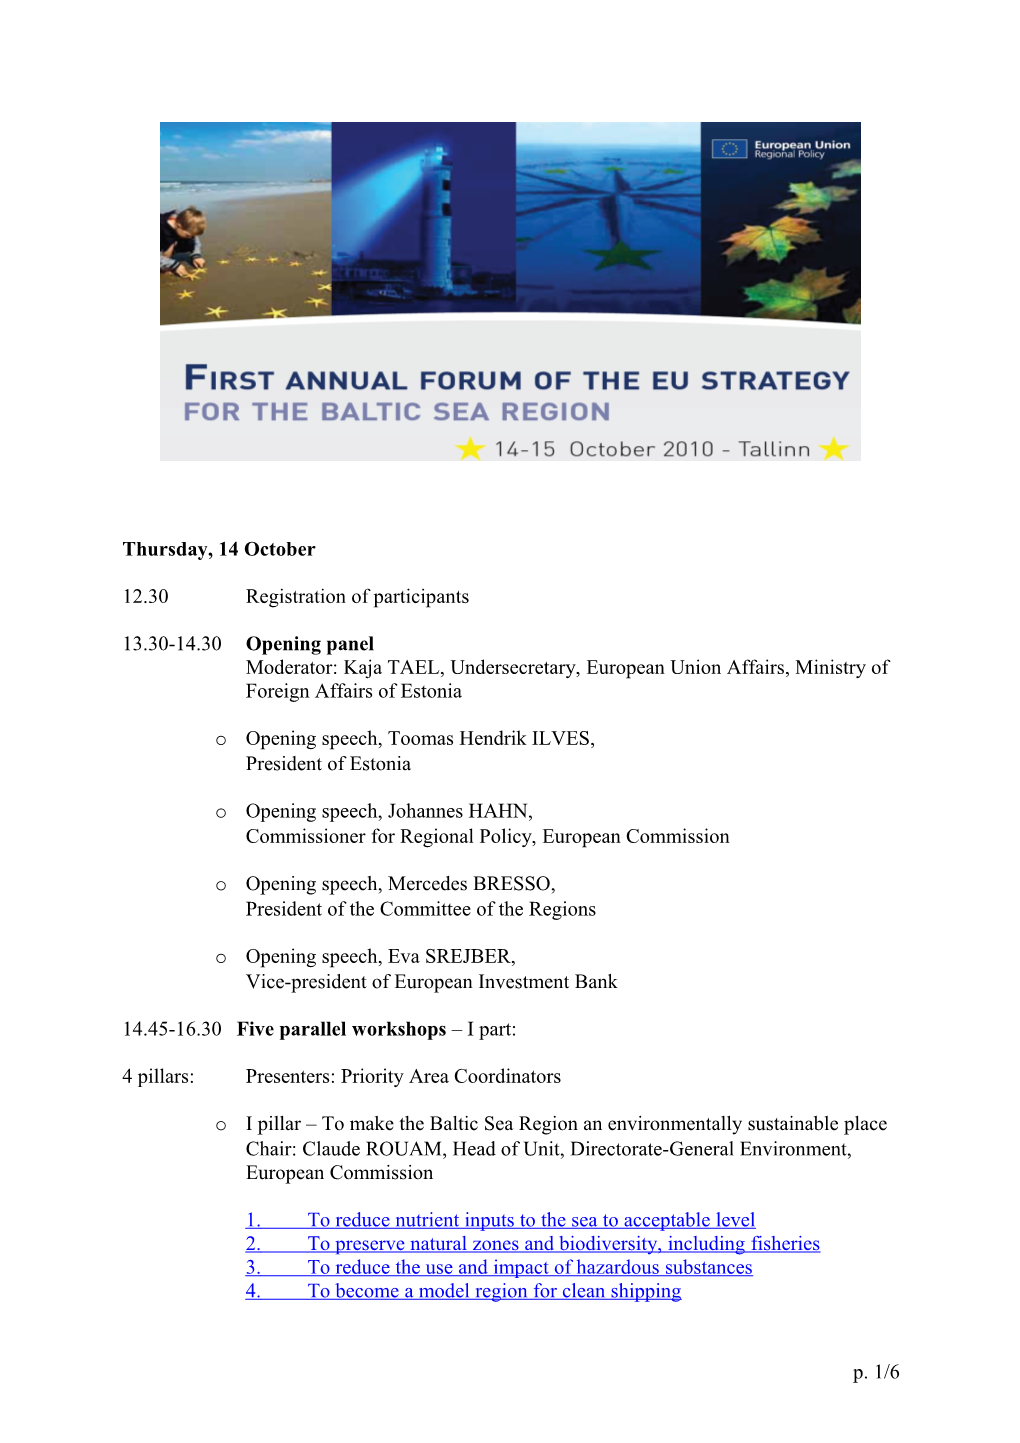 13.30-14.30Opening Panel Moderator: Kaja TAEL, Undersecretary, European Union Affairs